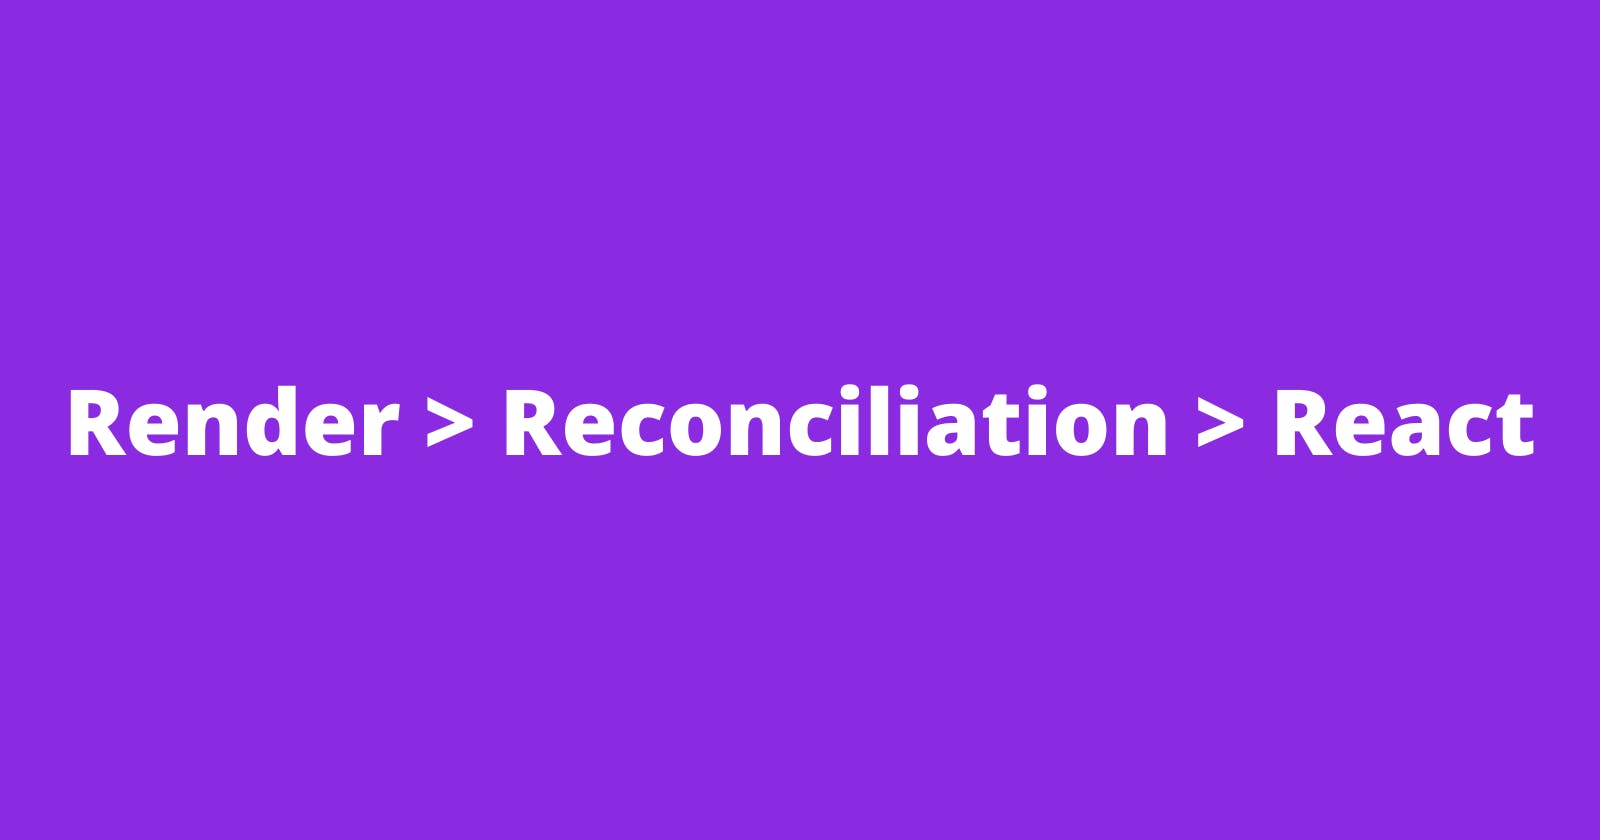 Render > Reconciliation > React